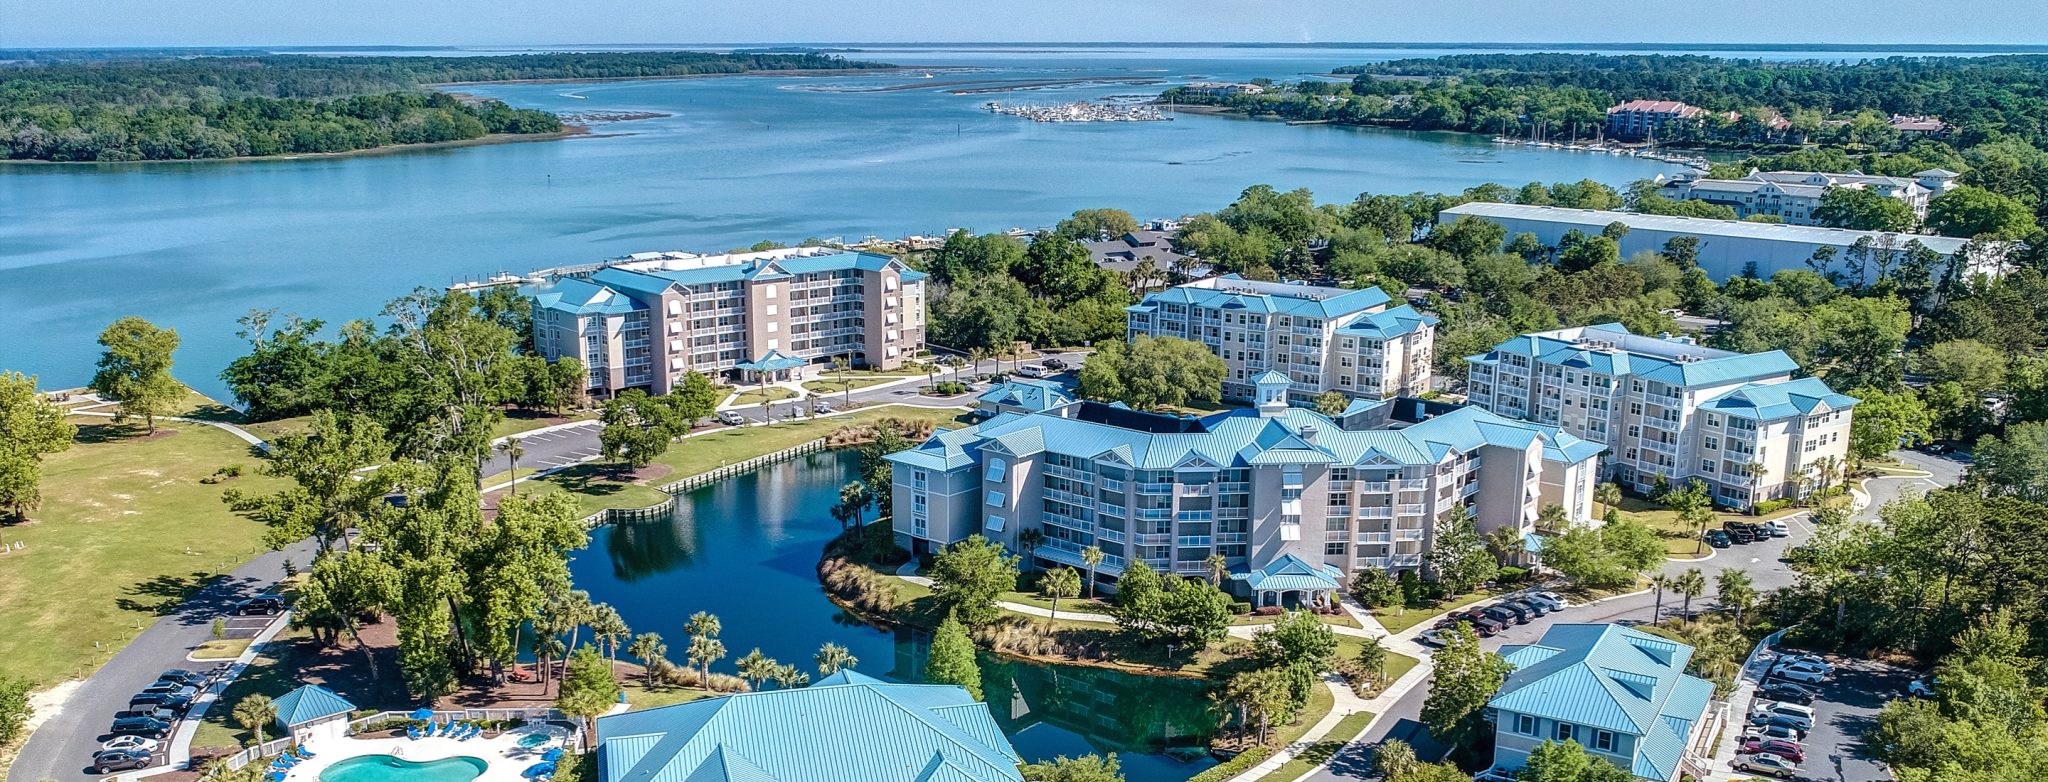 Spinnaker Resorts Update Spring 2021 – Hilton Head